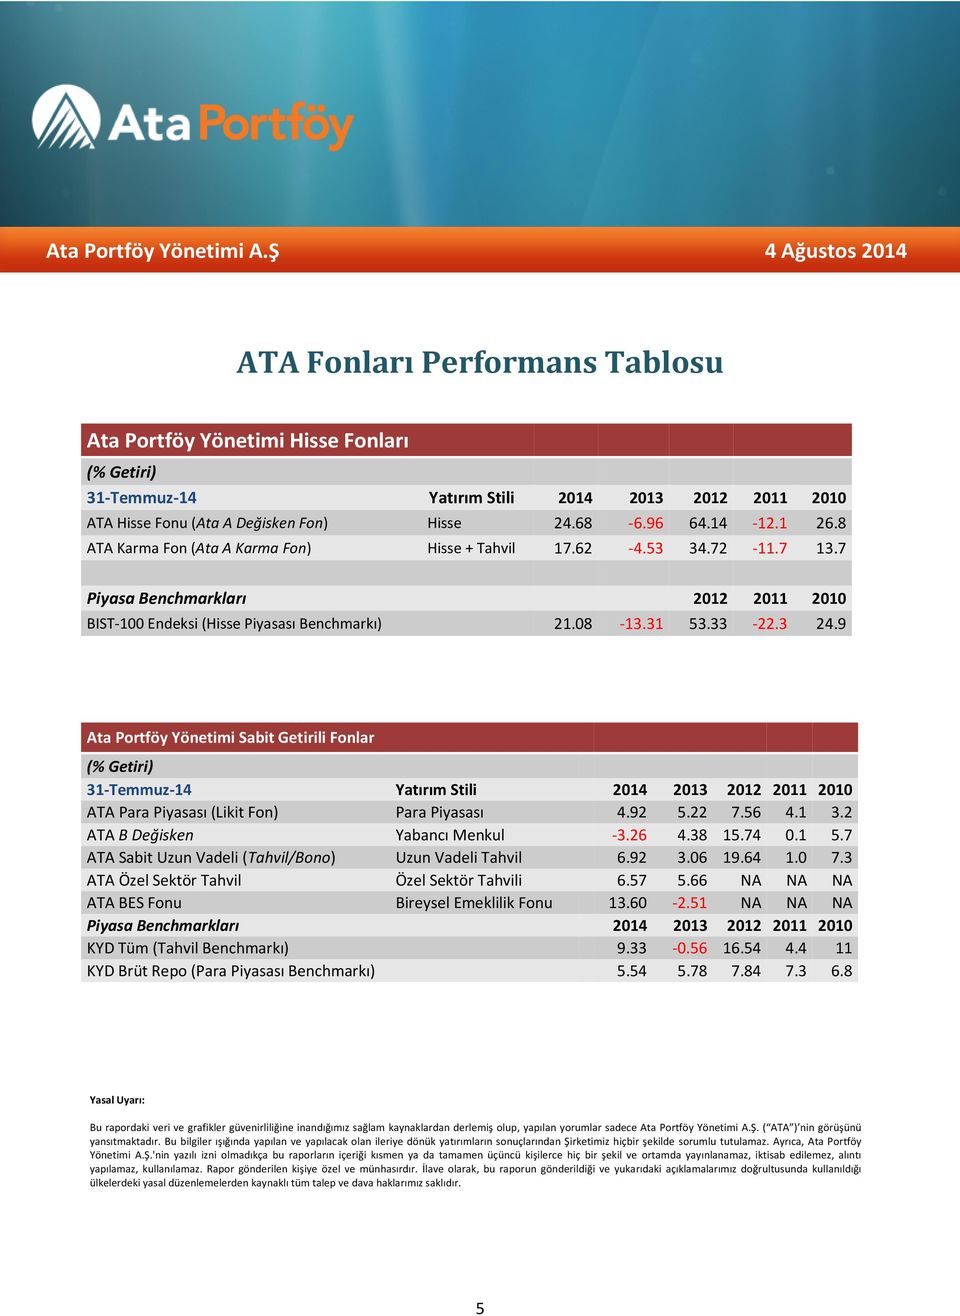 9 Ata Portföy Yönetimi Sabit Getirili Fonlar (% Getiri) 31-Temmuz-14 Yatırım Stili 2014 2013 2012 2011 2010 ATA Para Piyasası (Likit Fon) Para Piyasası 4.92 5.22 7.56 4.1 3.